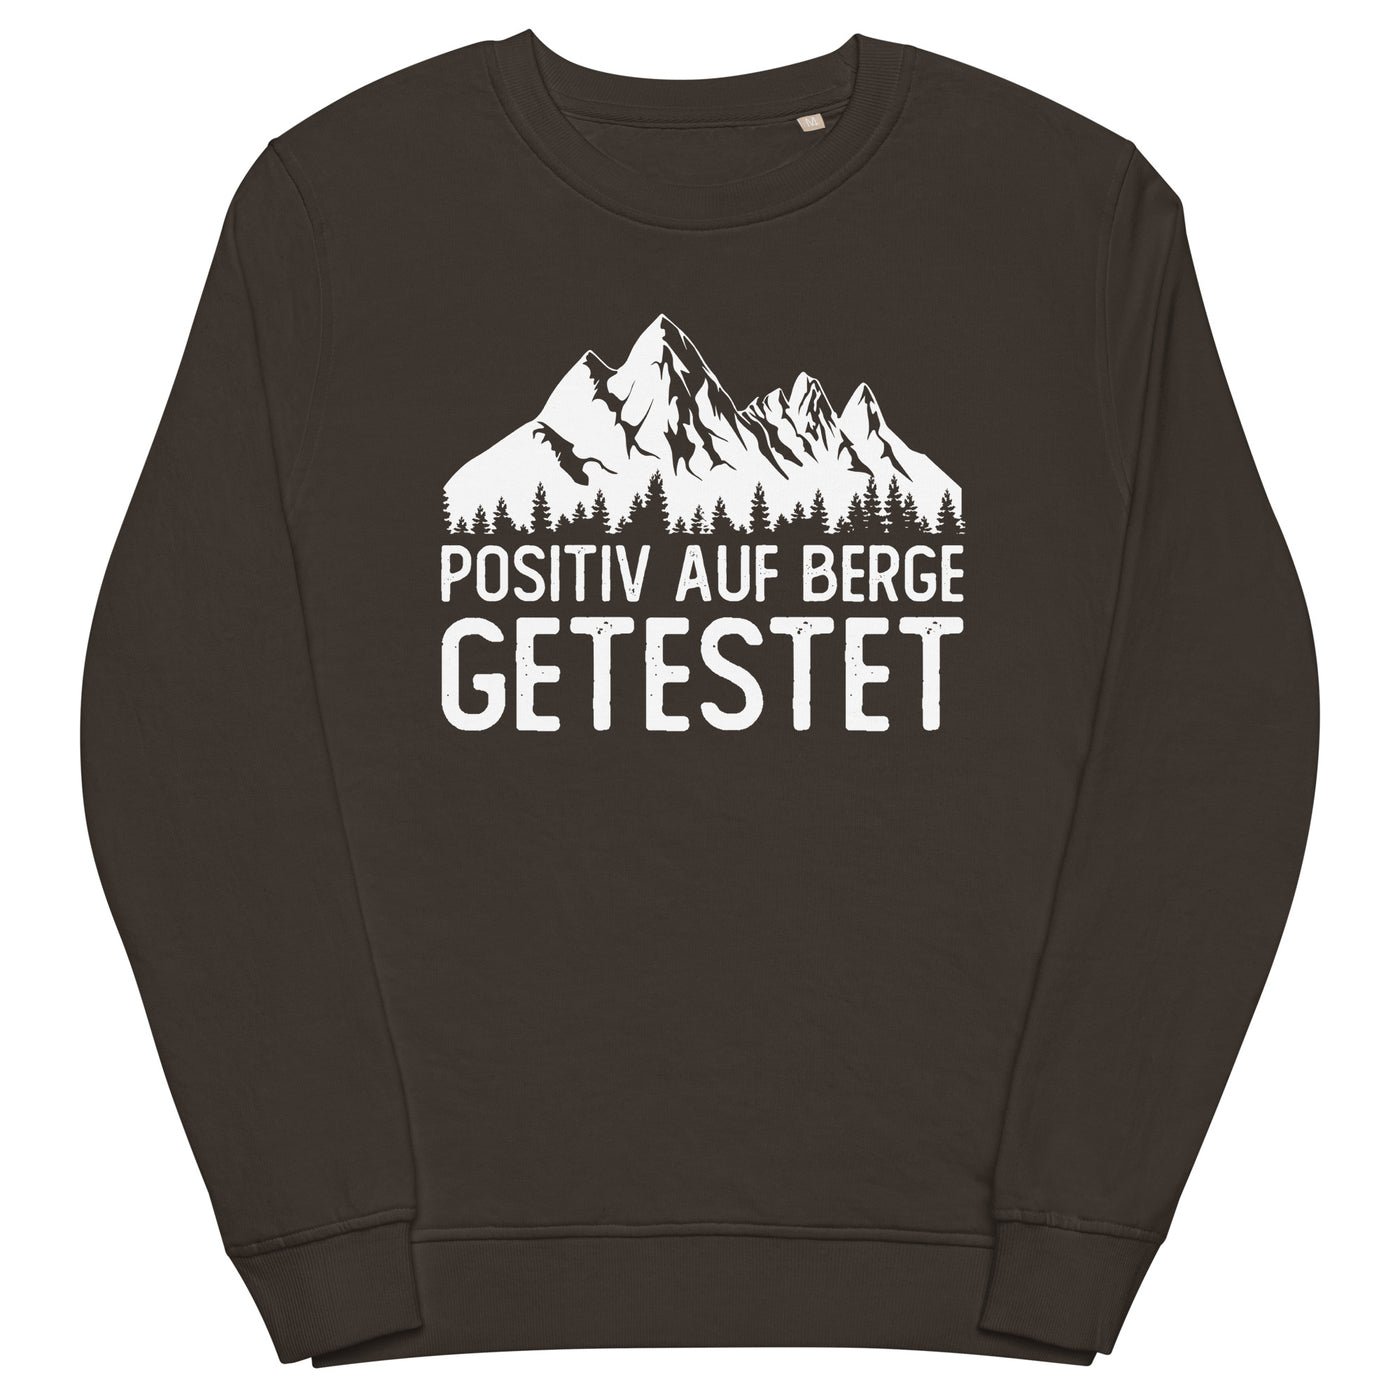 Positiv auf Berge getestet - Unisex Premium Organic Sweatshirt berge xxx yyy zzz Deep Charcoal Grey